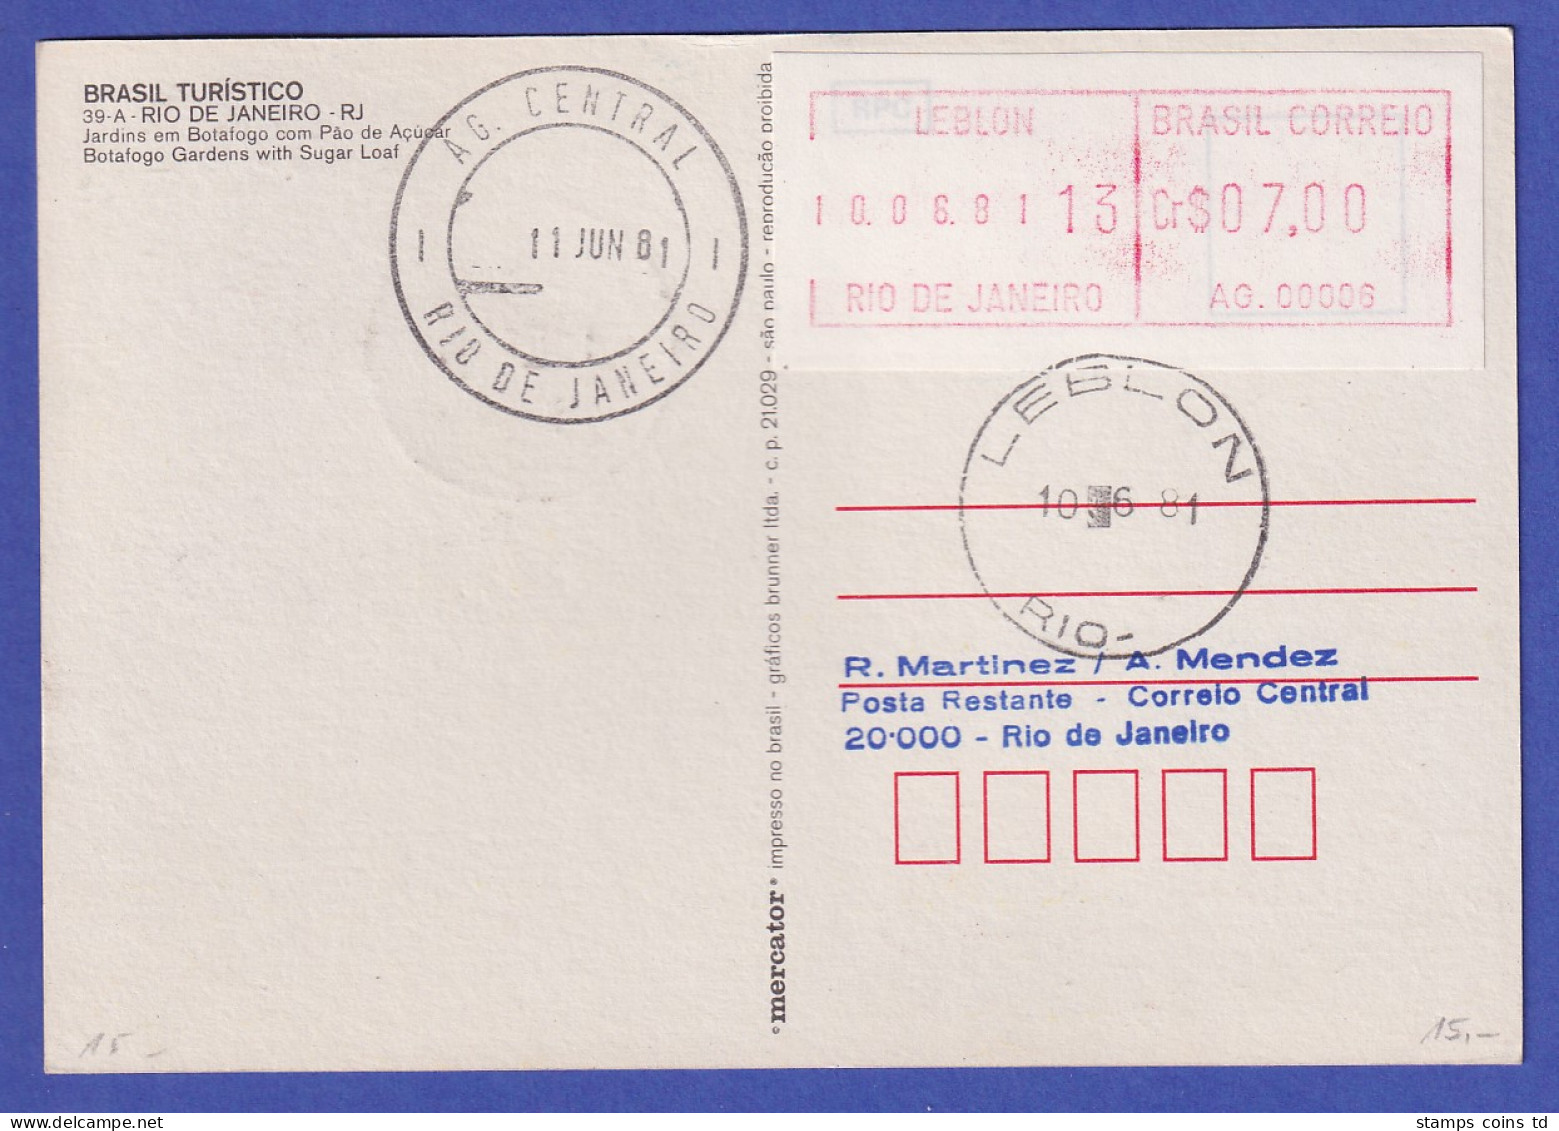 Brasilien Frama-ATM AG.00006 Und VA.00005 LEBLON Auf Ansichtskarte, O 10.06.81 - Franking Labels